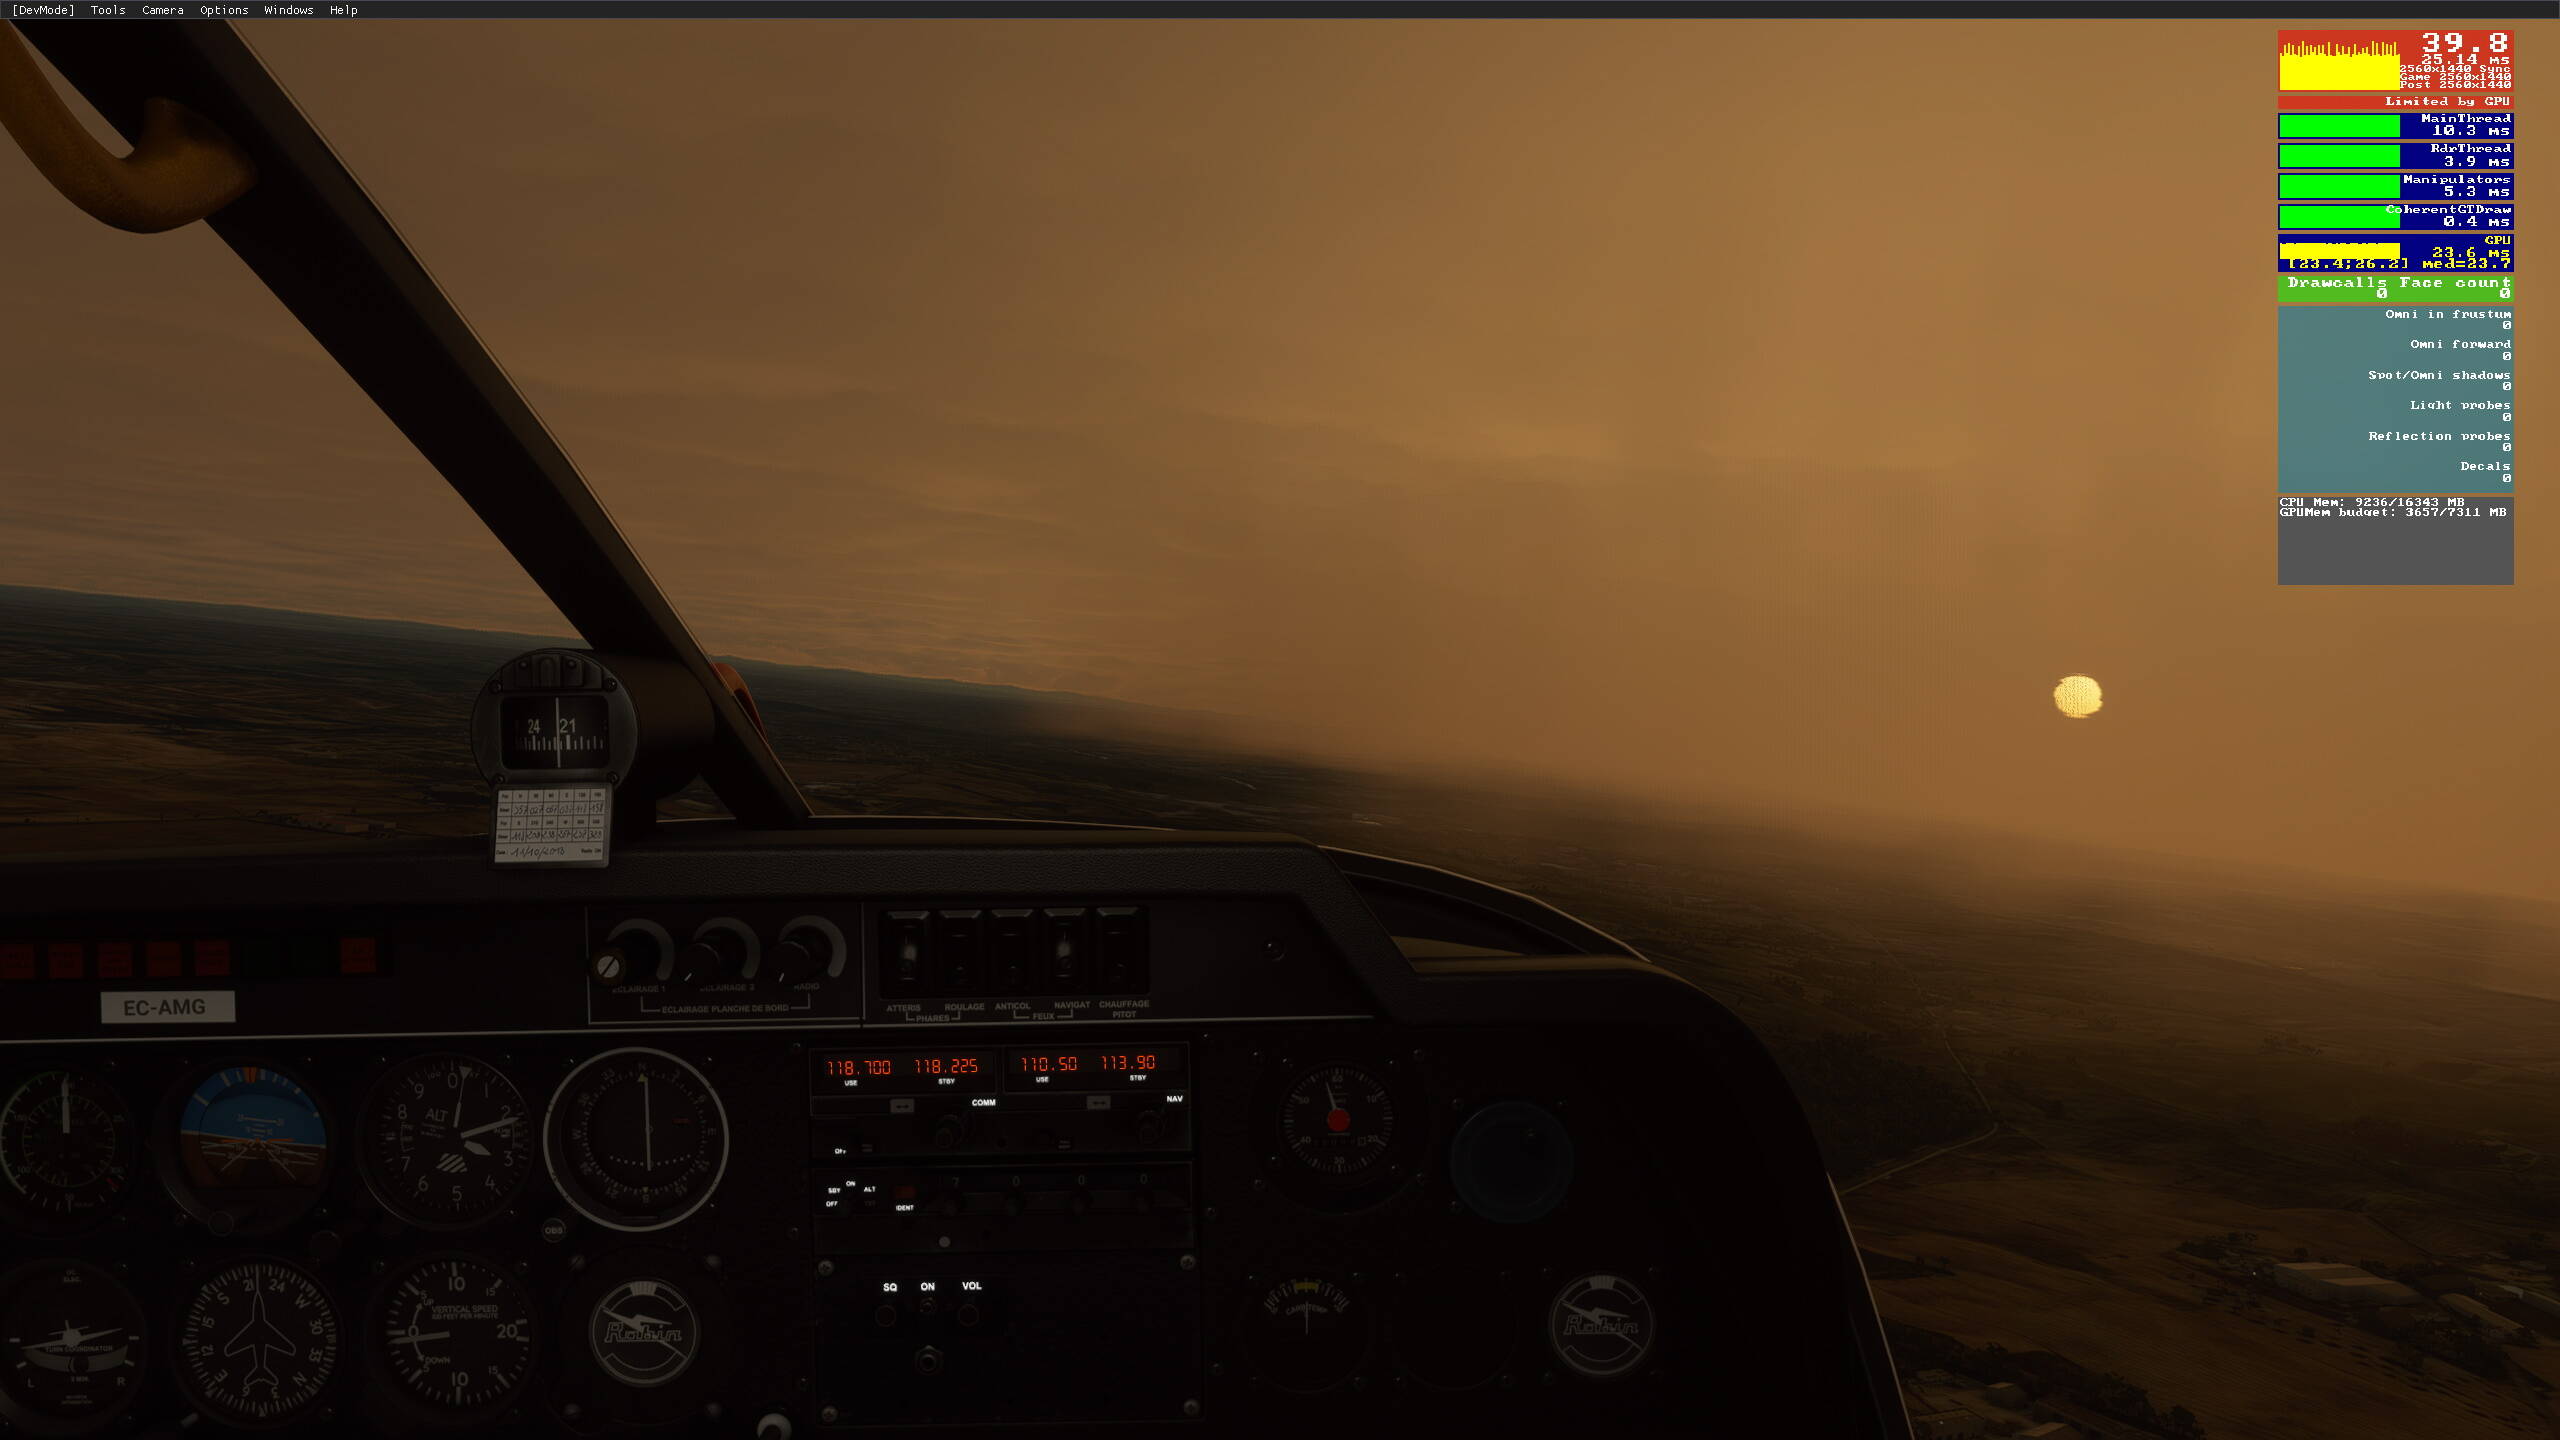 Head in the cloud(s): the return of Microsoft Flight Simulator